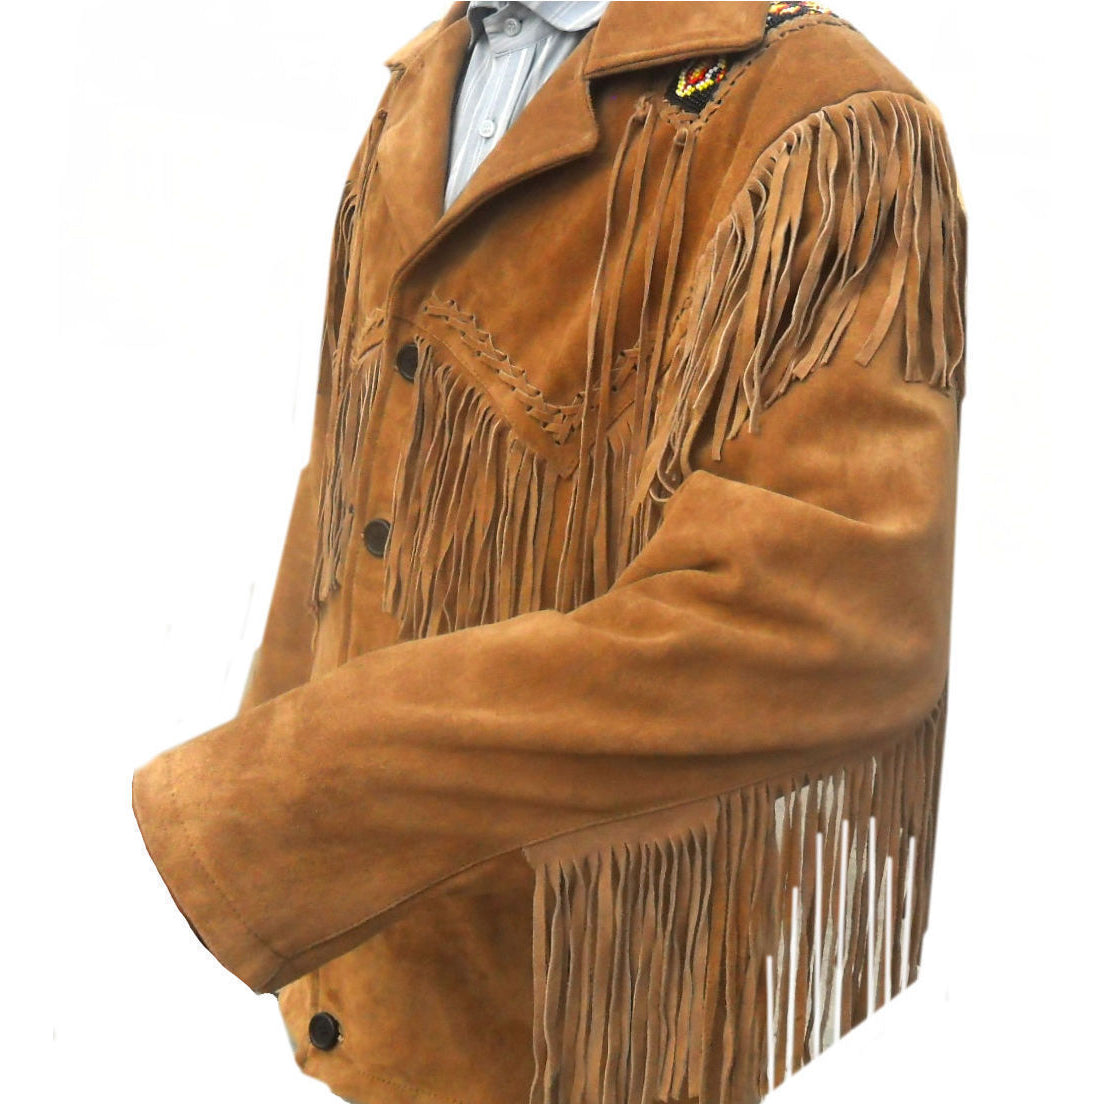 Men's Brown Suede Jacket | Native American Fringed & Beaded Coat